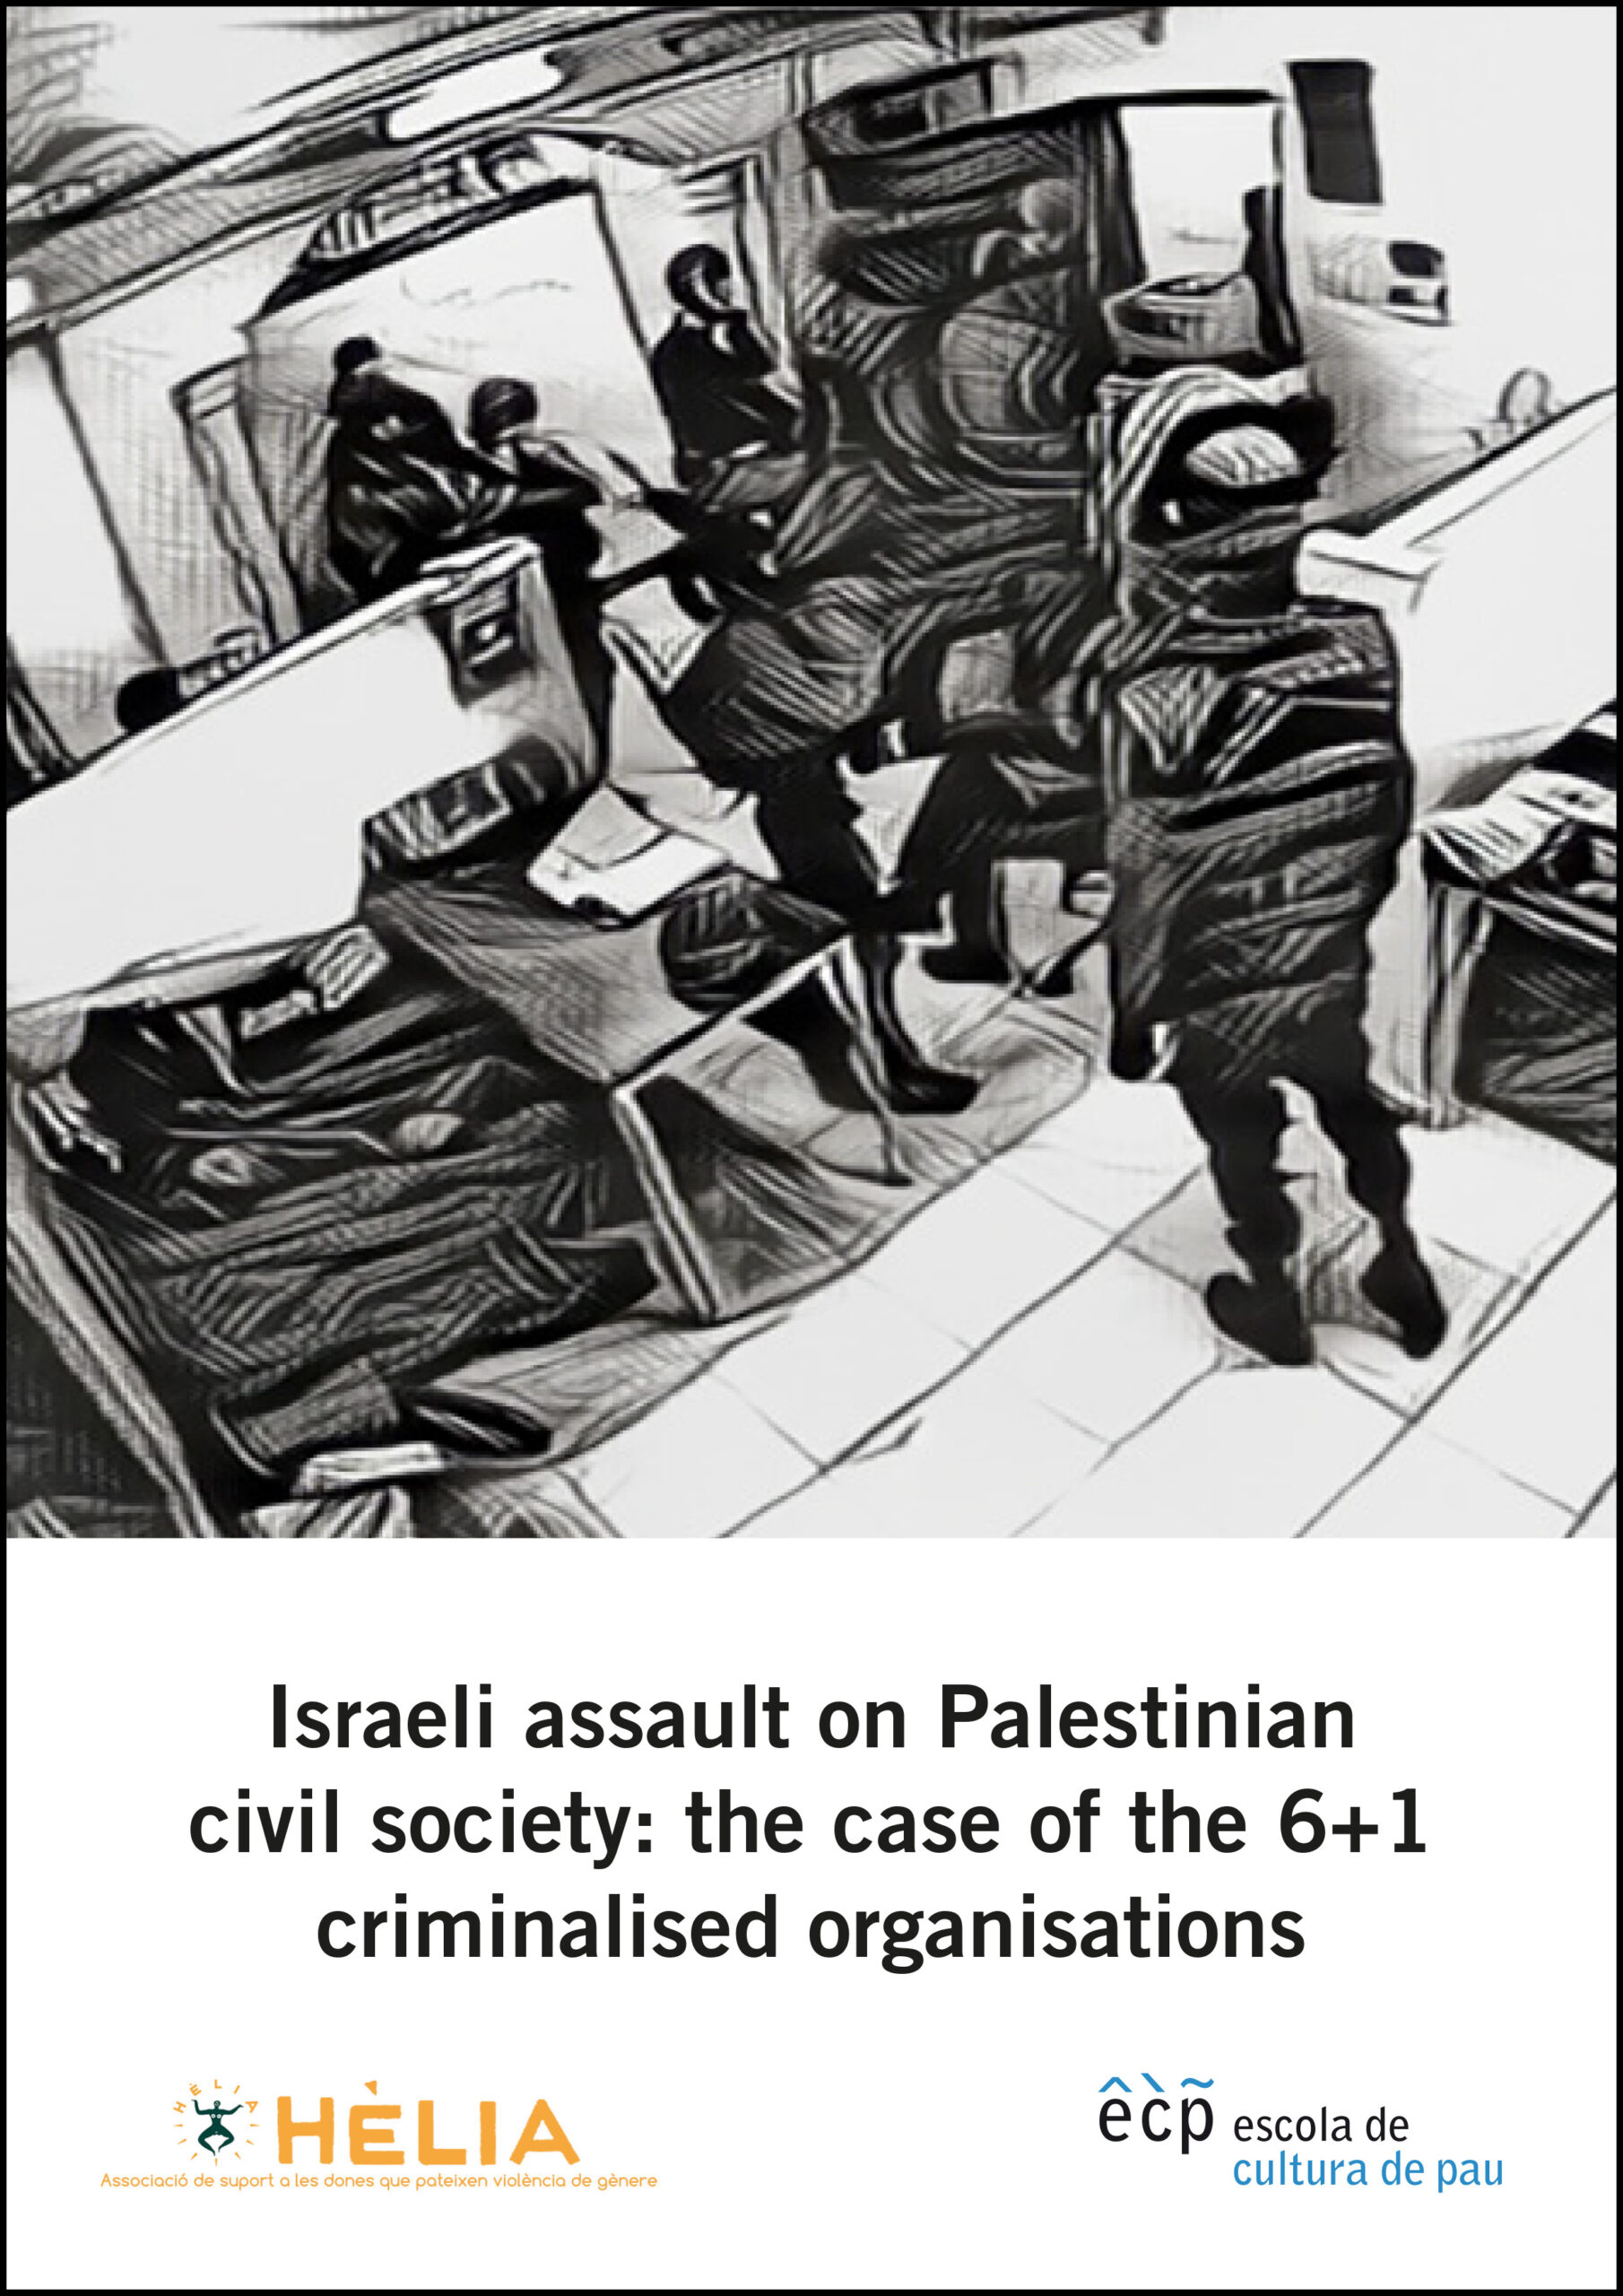 Israeli assault on Palestinian civil society:
the case of the 6+1 criminalised organisations